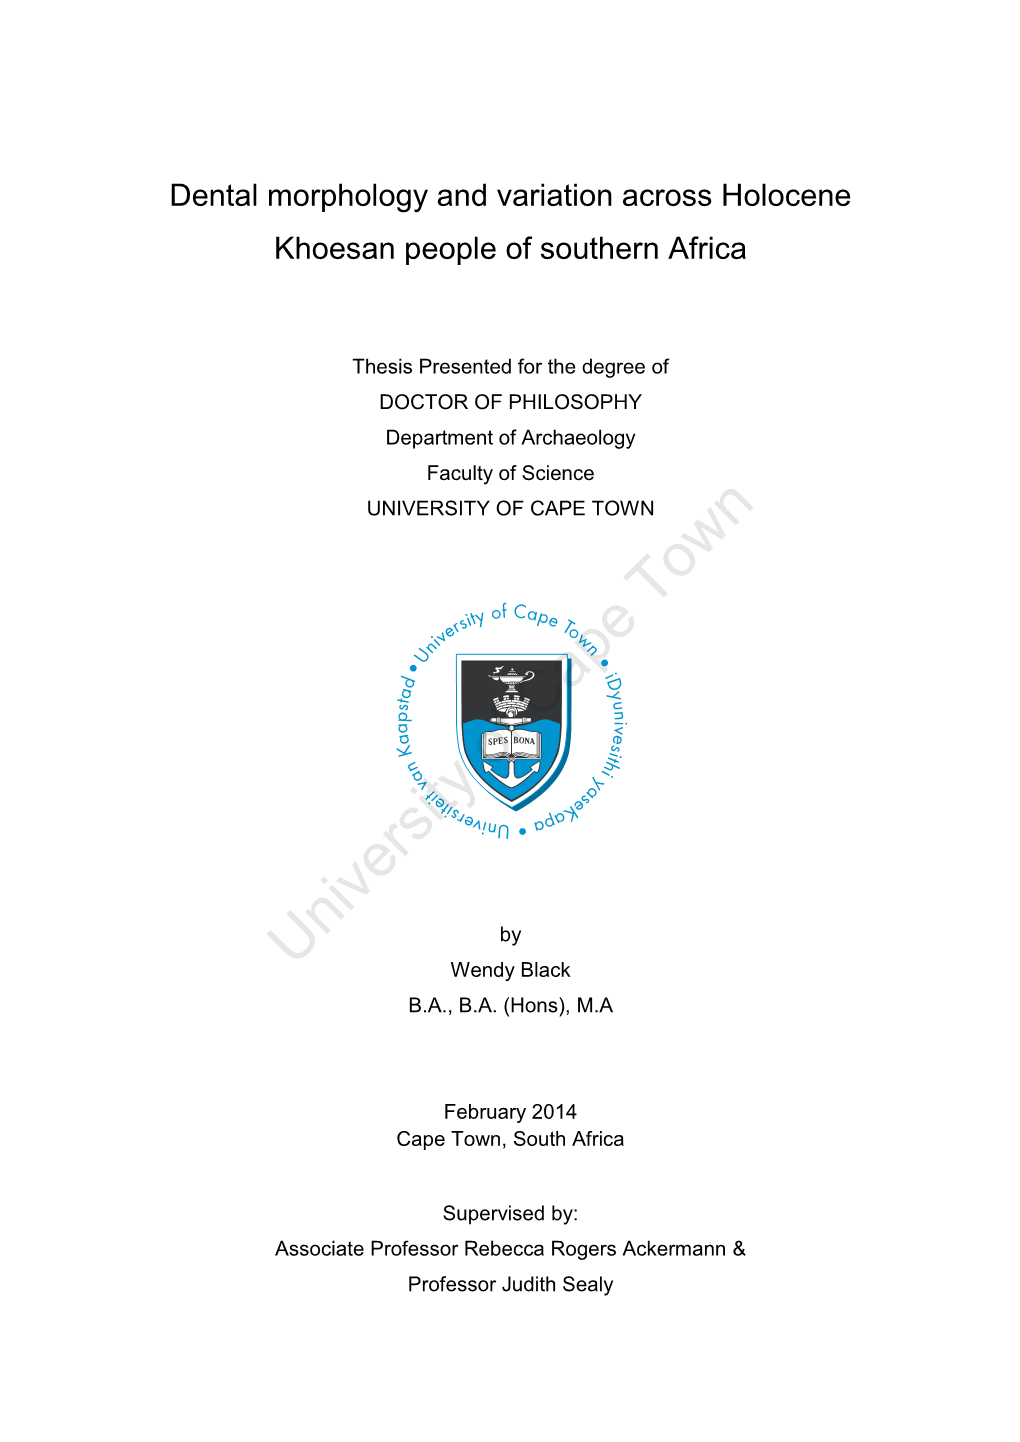 Dental Morphology and Variation Across Holocene Khoesan People of Southern Africa